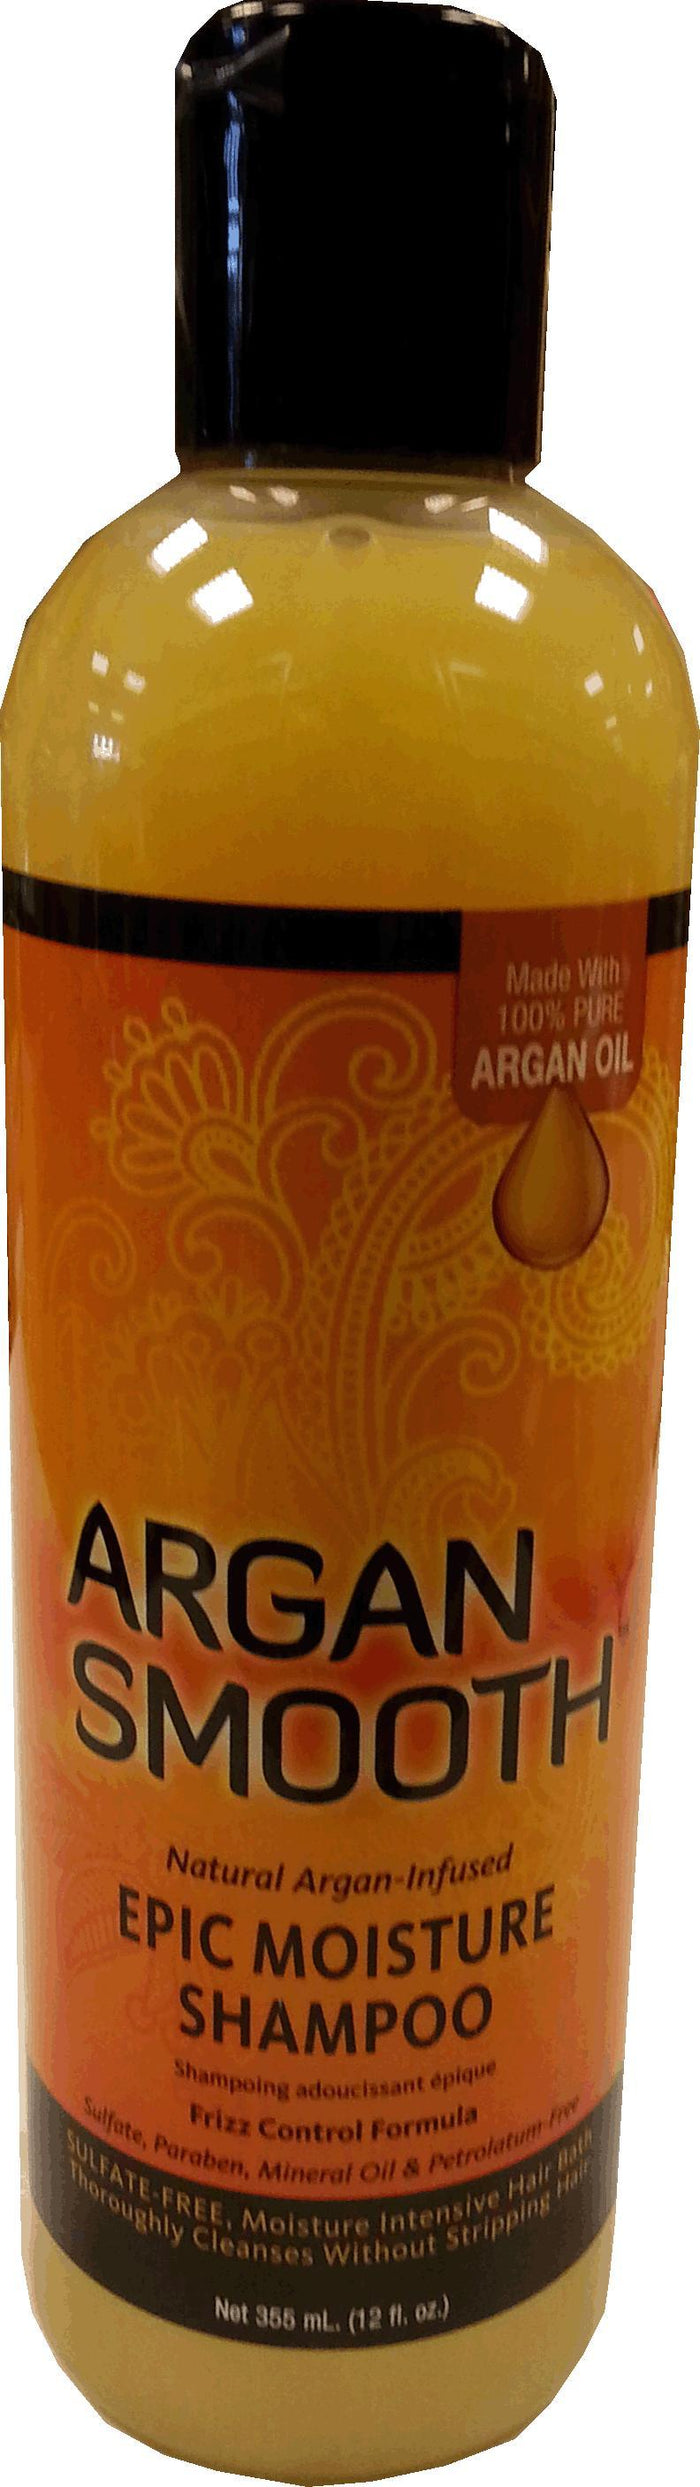 Argan Smooth Epic Moisture Shampoo 355 ml